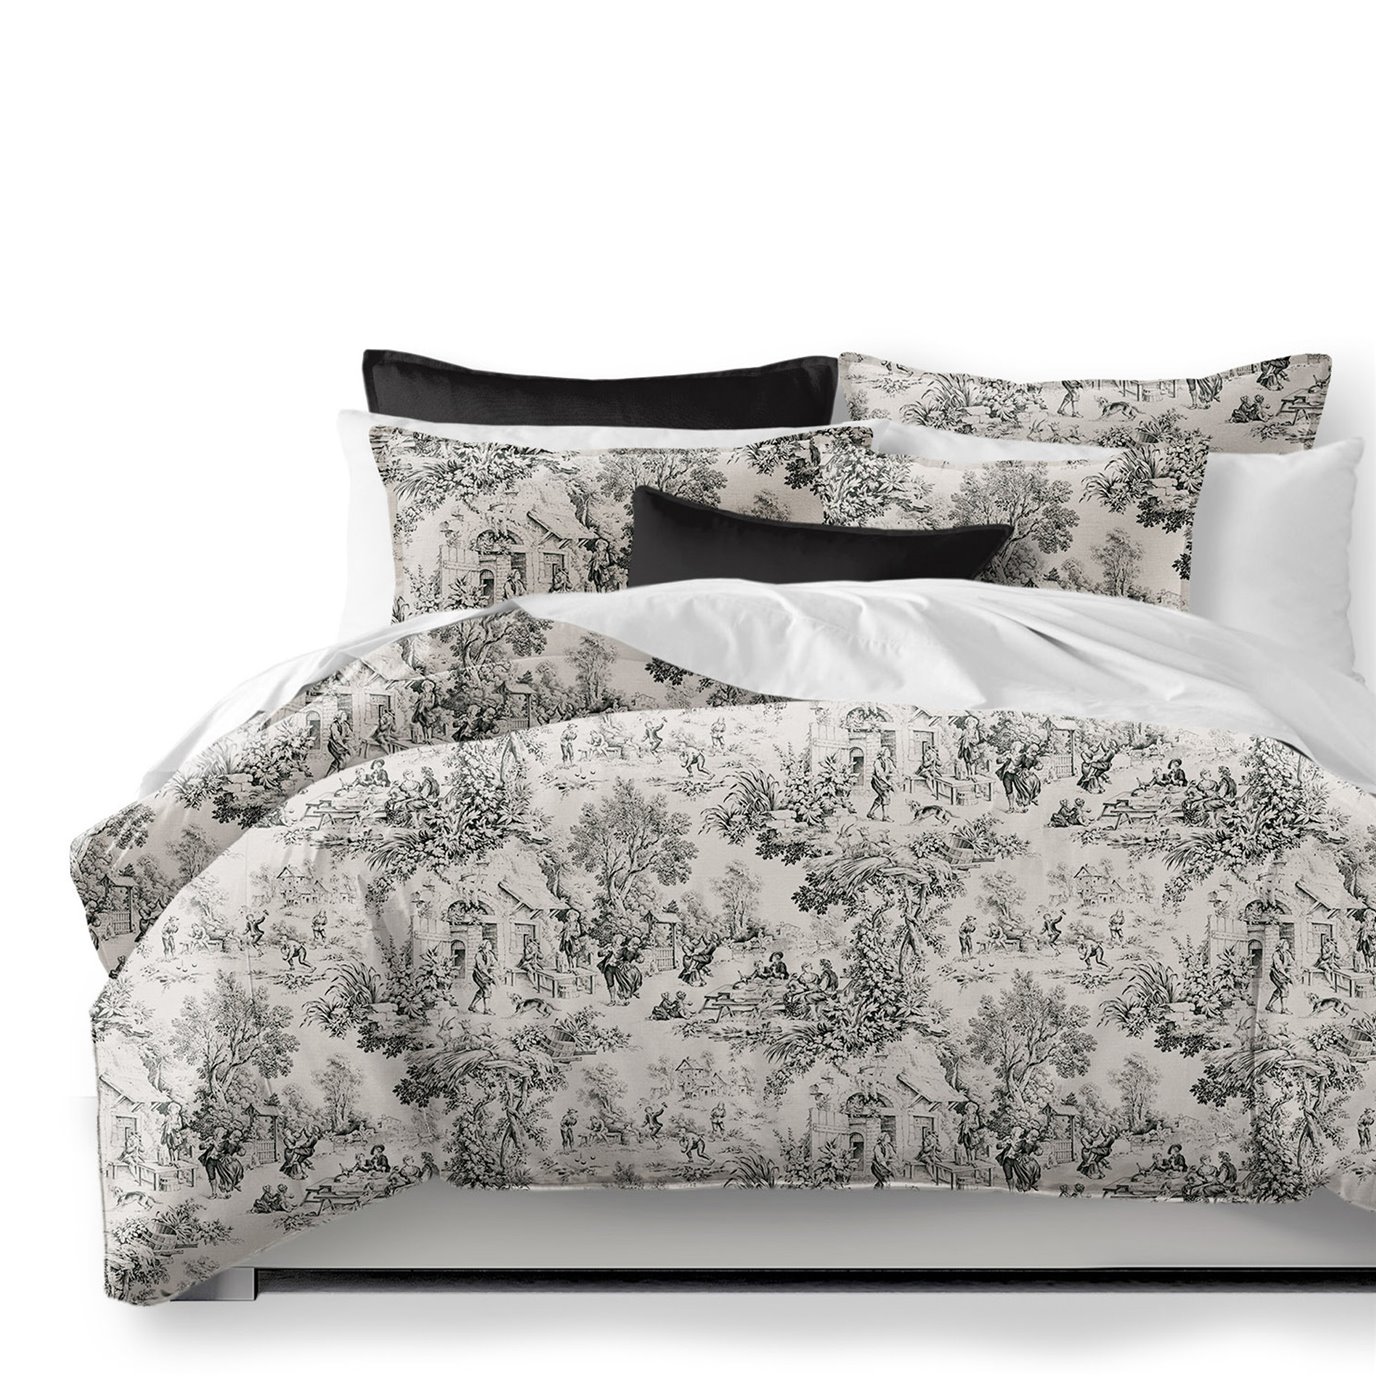 Maison Toile Black Comforter and Pillow Sham(s) Set - Size Super Queen